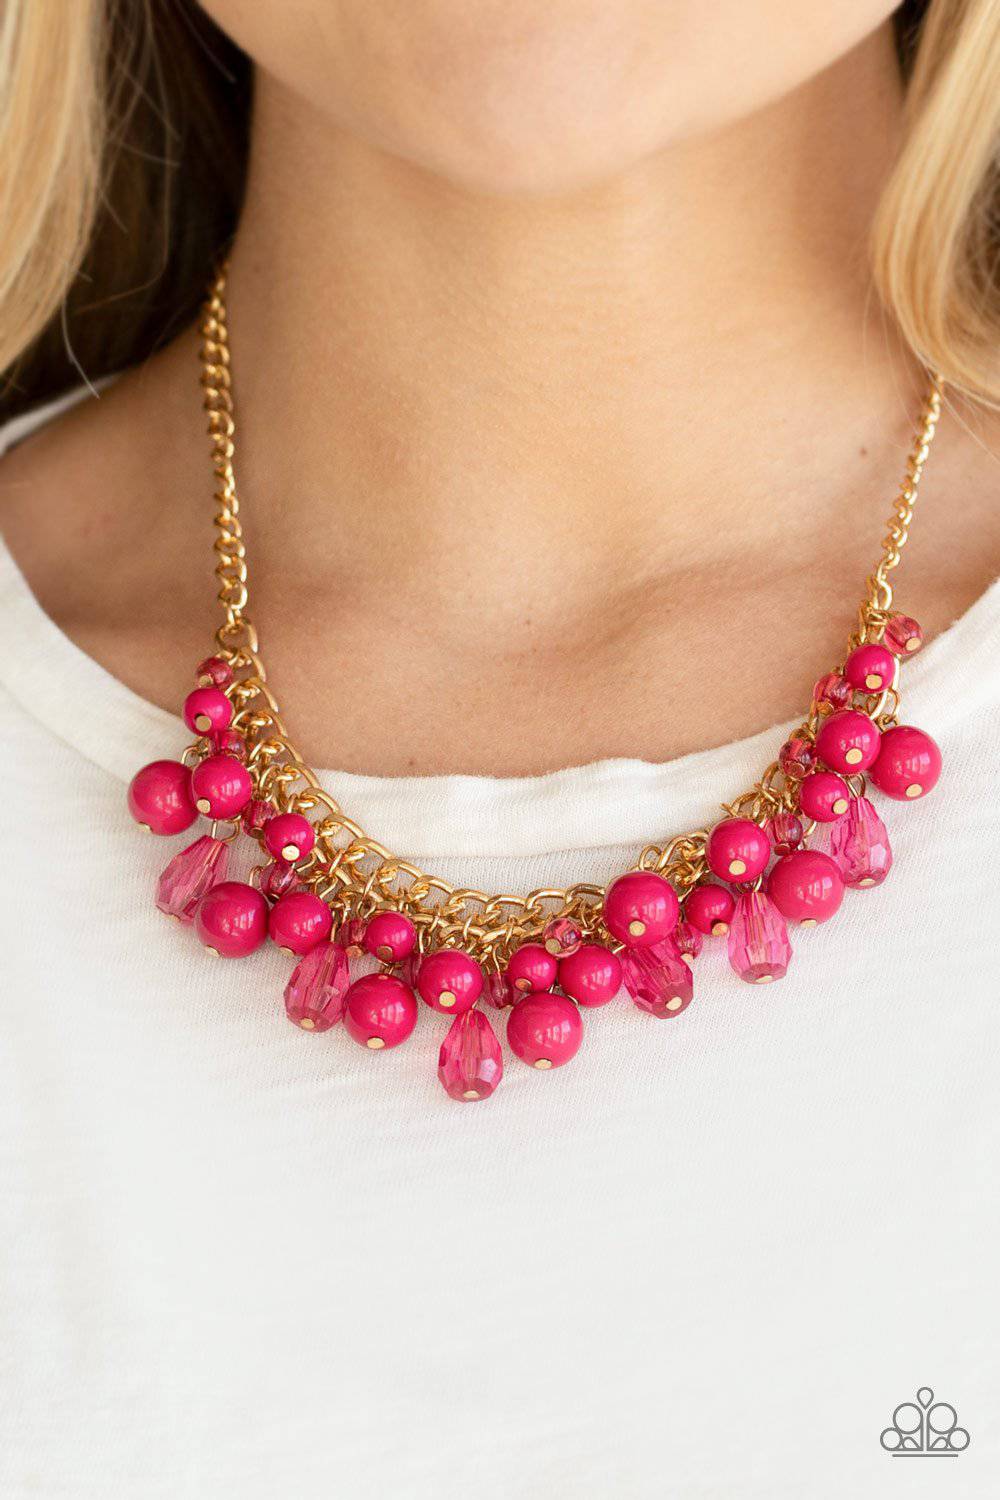 Tour de Trendsetter - Pink & Gold Necklace - Paparazzi Accessories - GlaMarous Titi Jewels